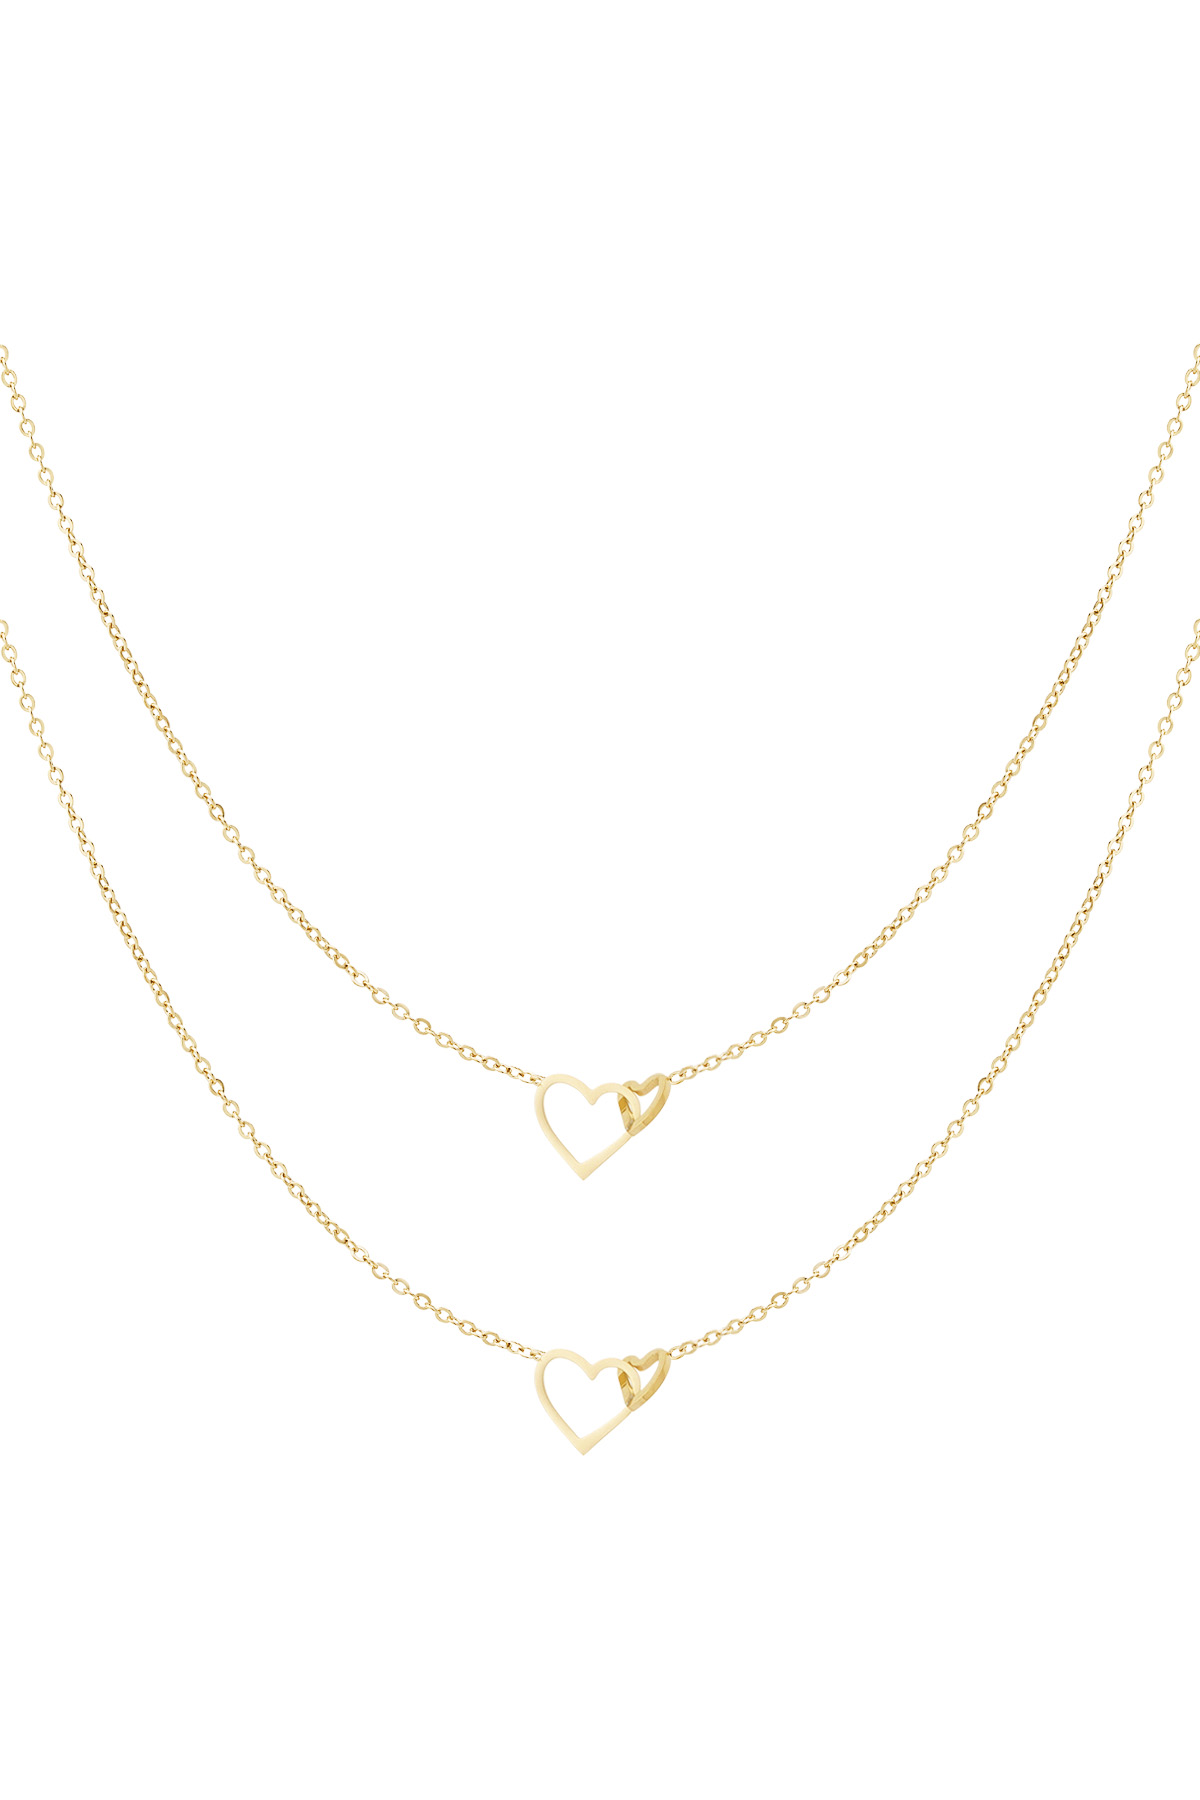 Eternal love necklace - gold